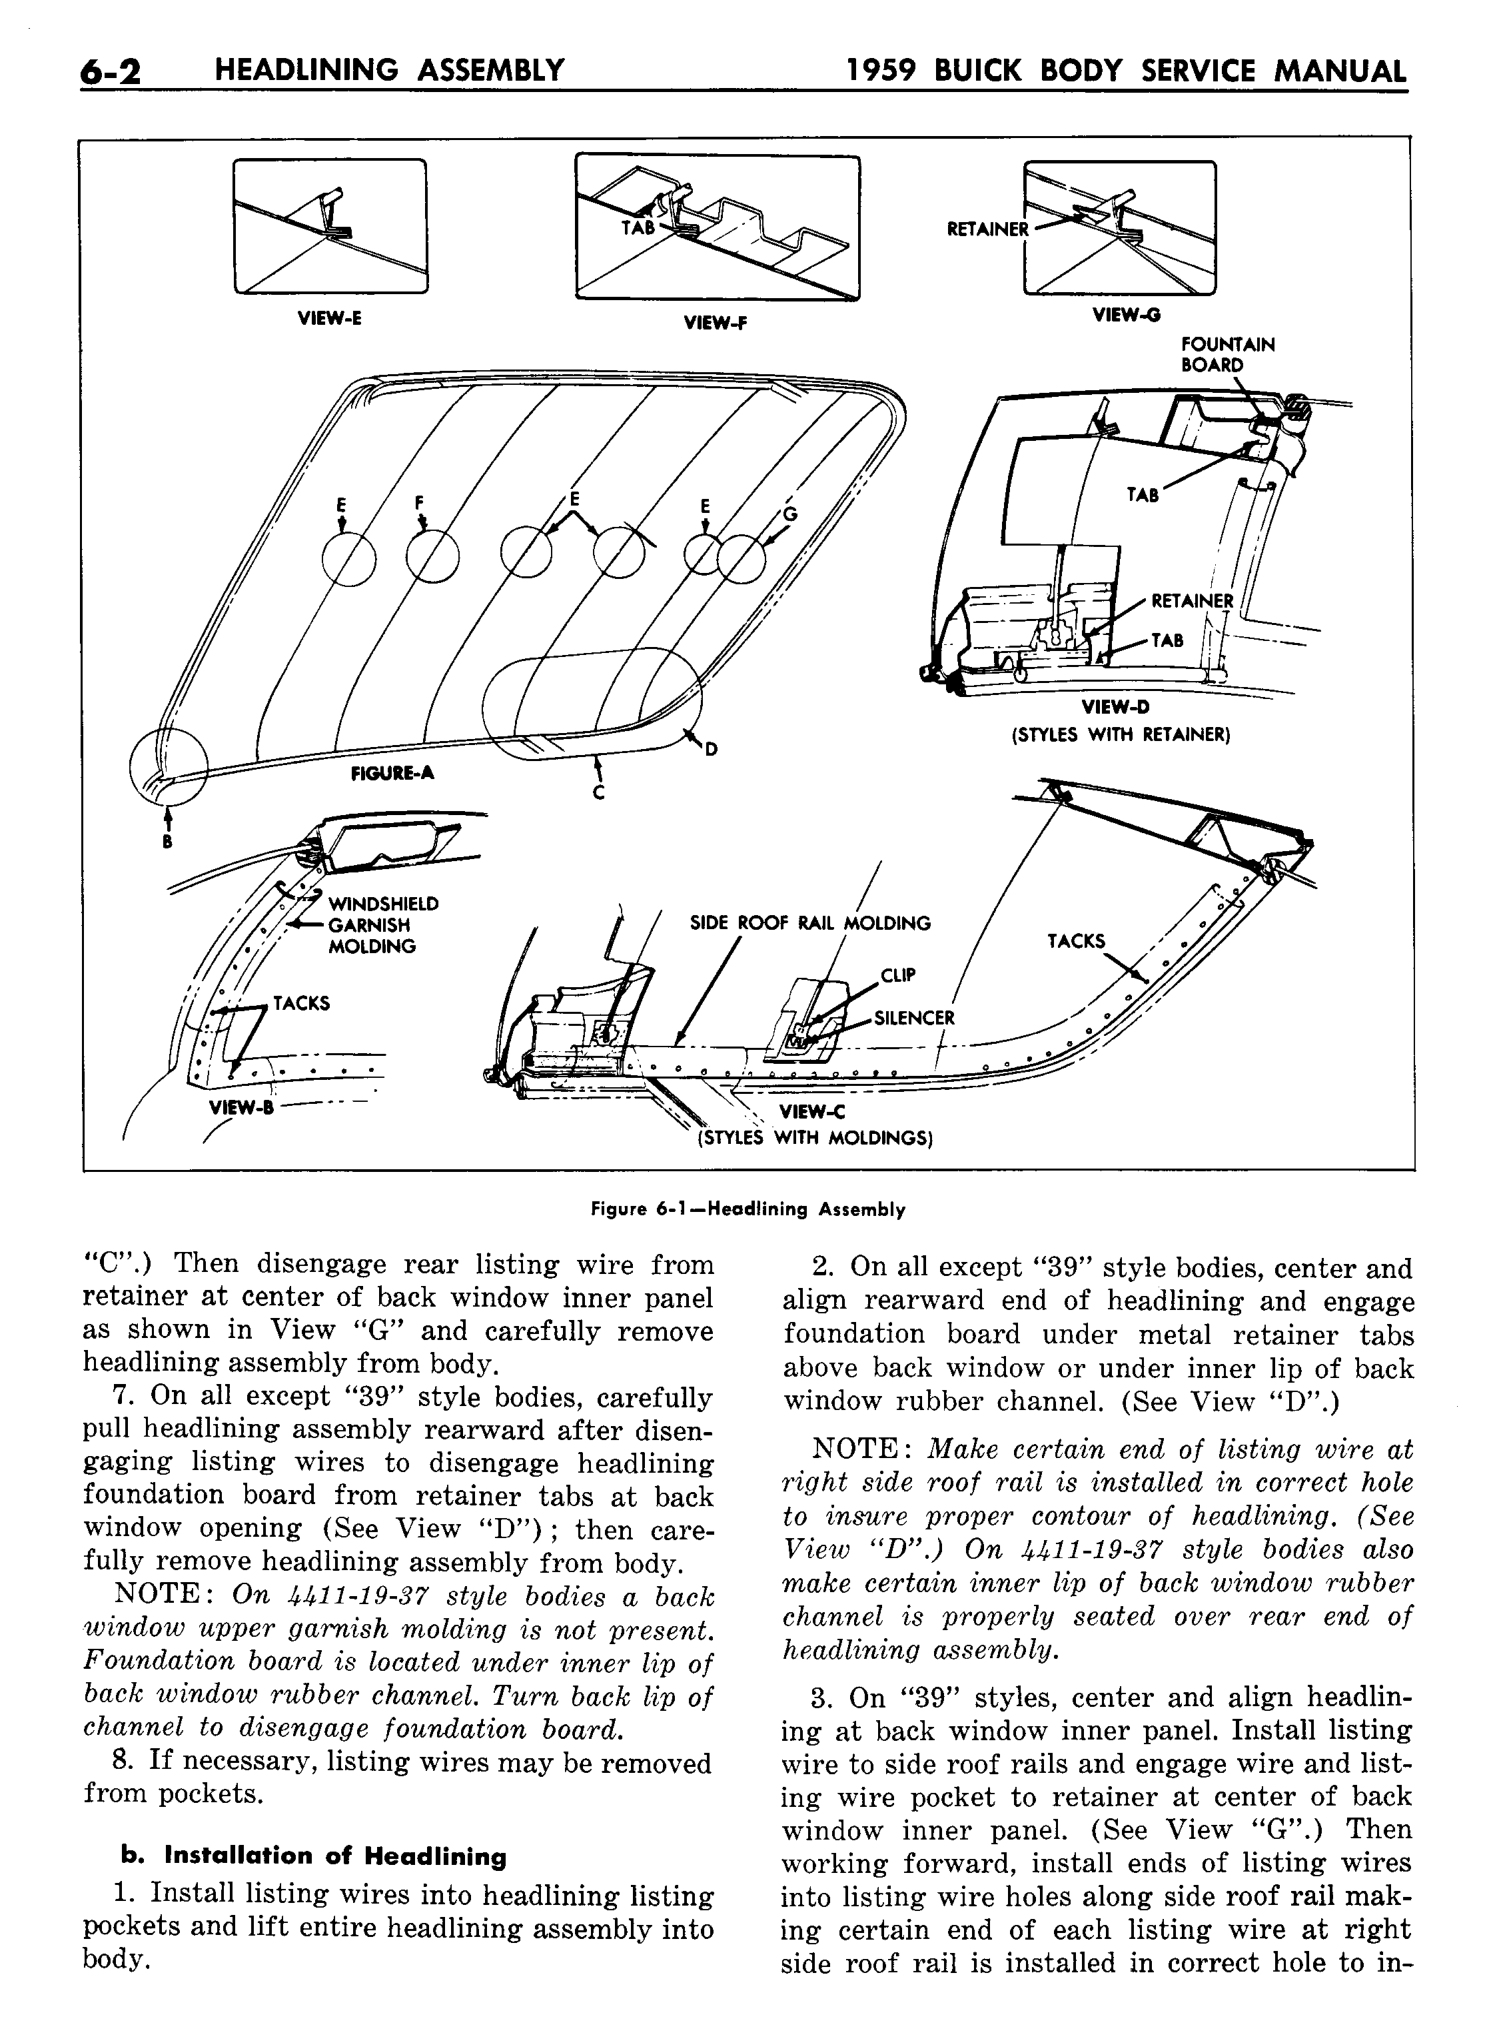 n_07 1959 Buick Body Service-Headlining_2.jpg